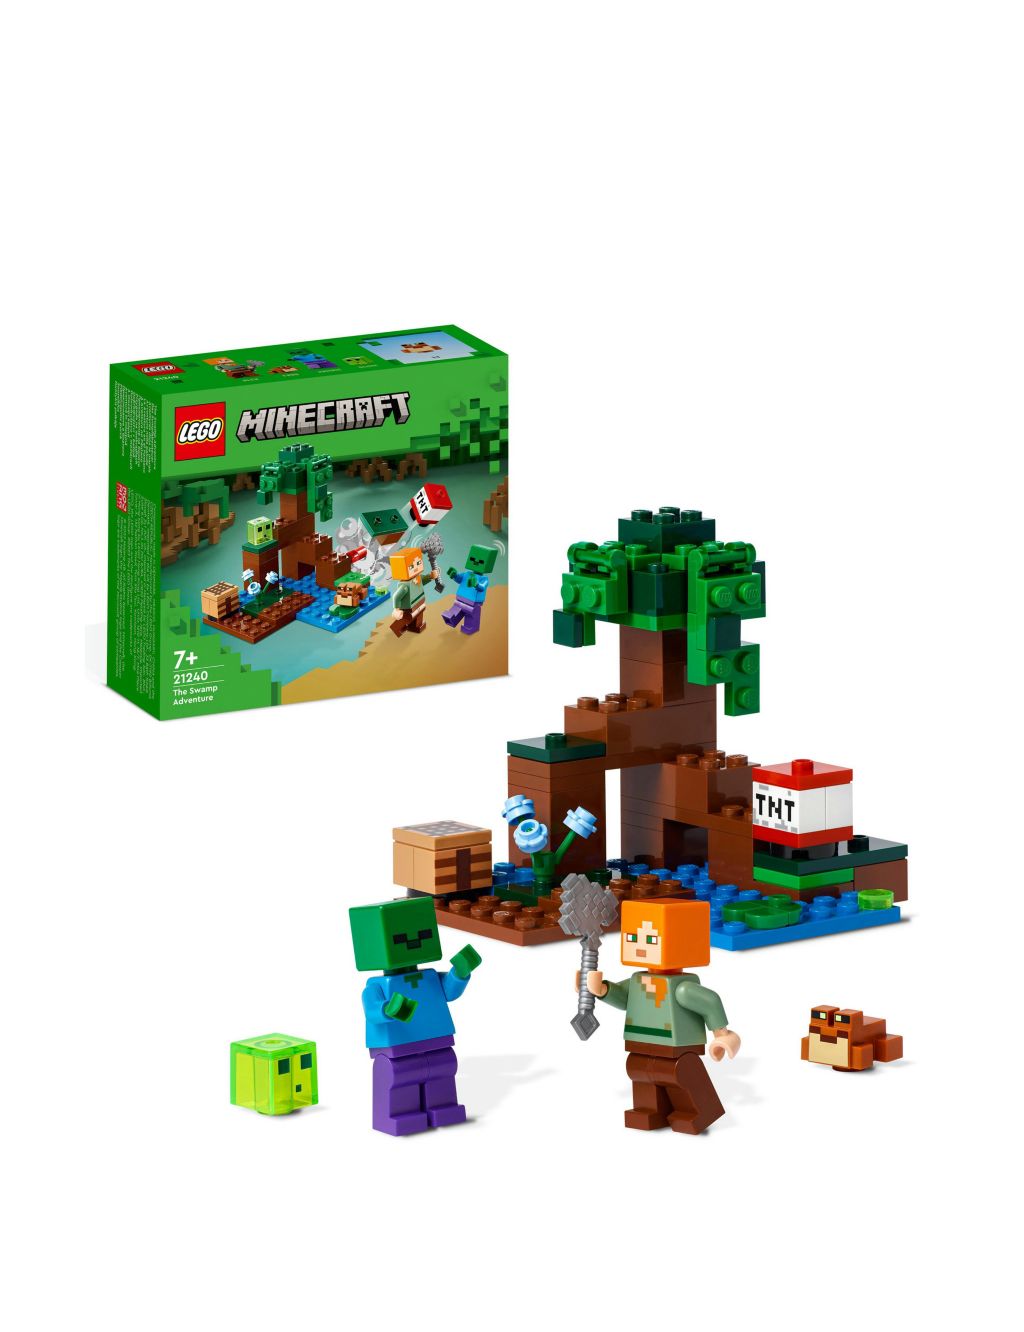 LEGO Minecraft The Swamp Adventure Biome Set  (7+ Yrs)